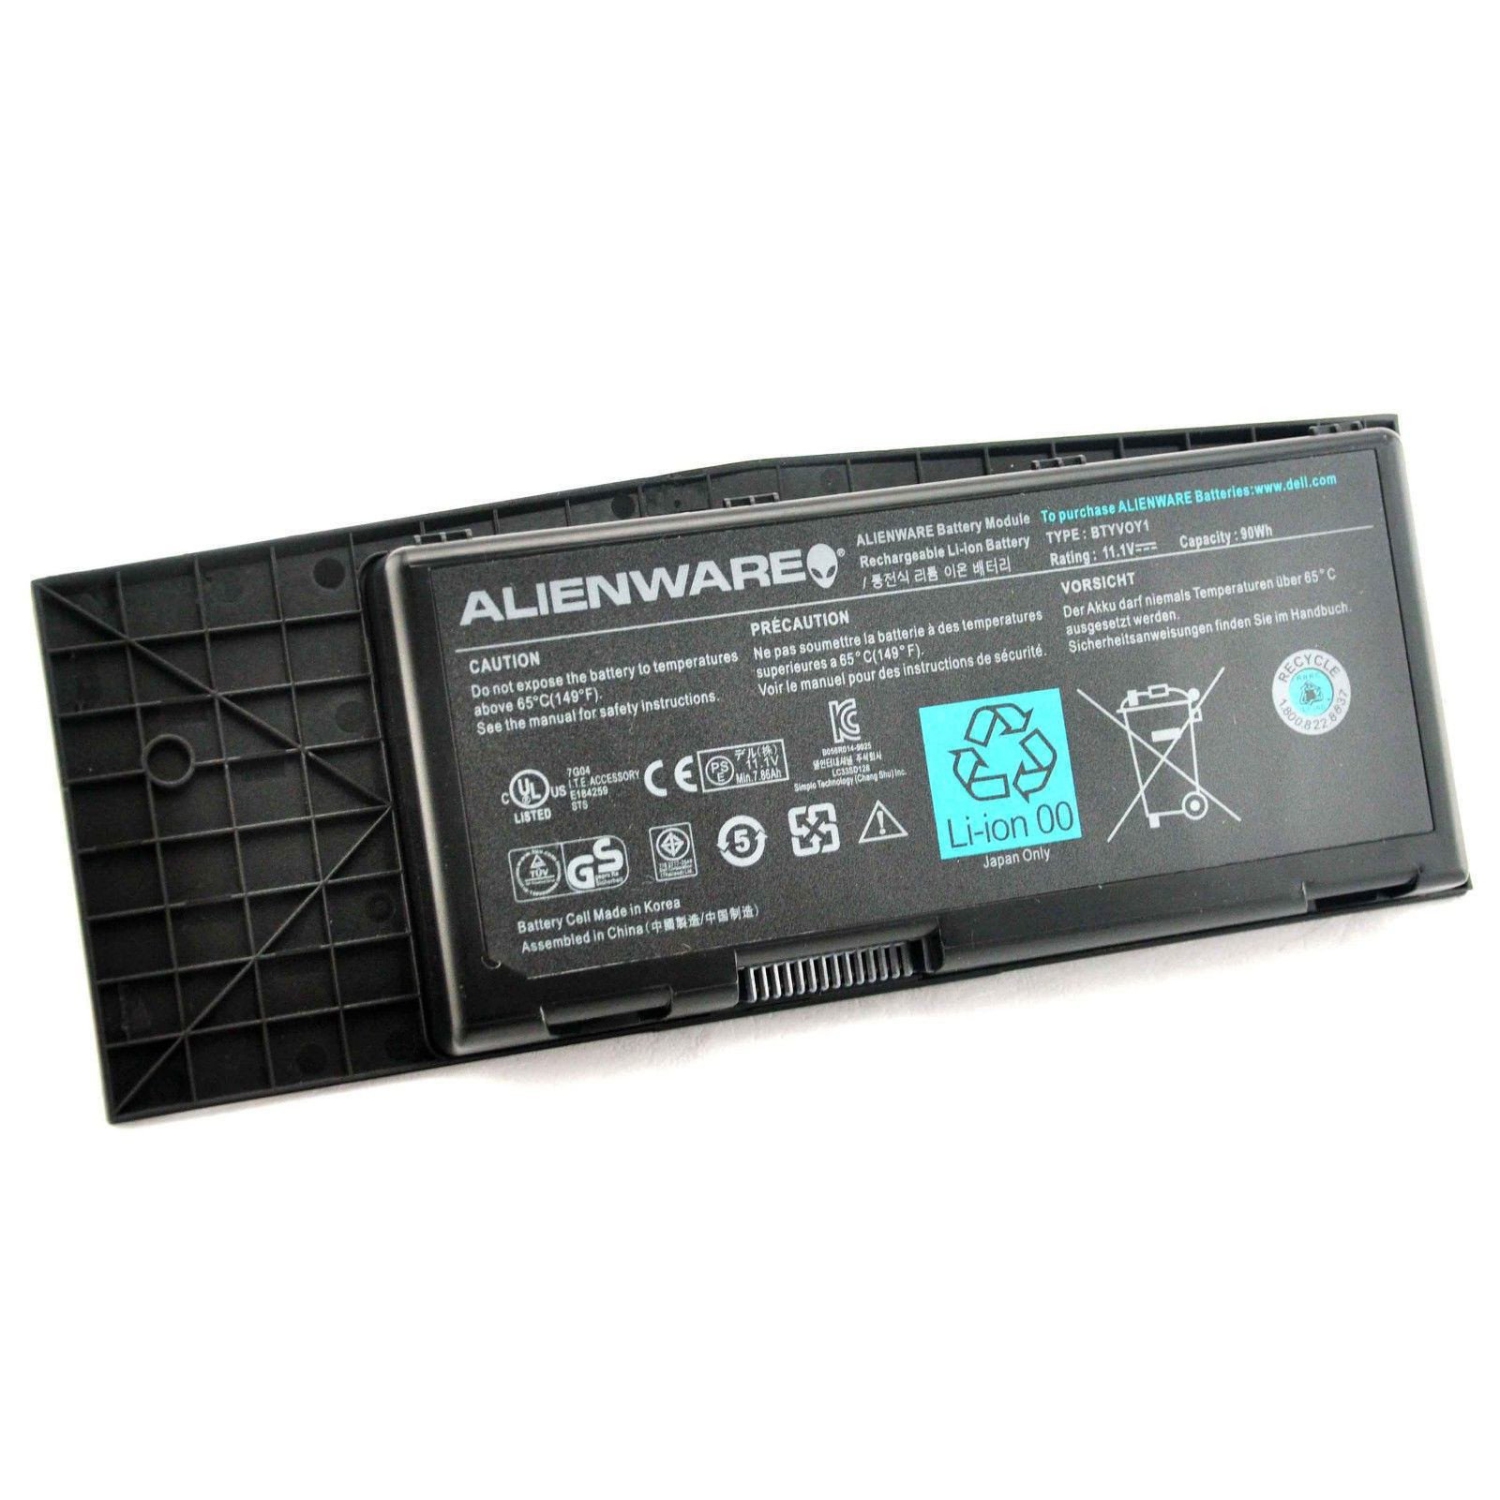 New Genuine Dell Alienware M17x R3 R4 BTYVOY1 Battery 7XC9N C0C5M 5WP5W